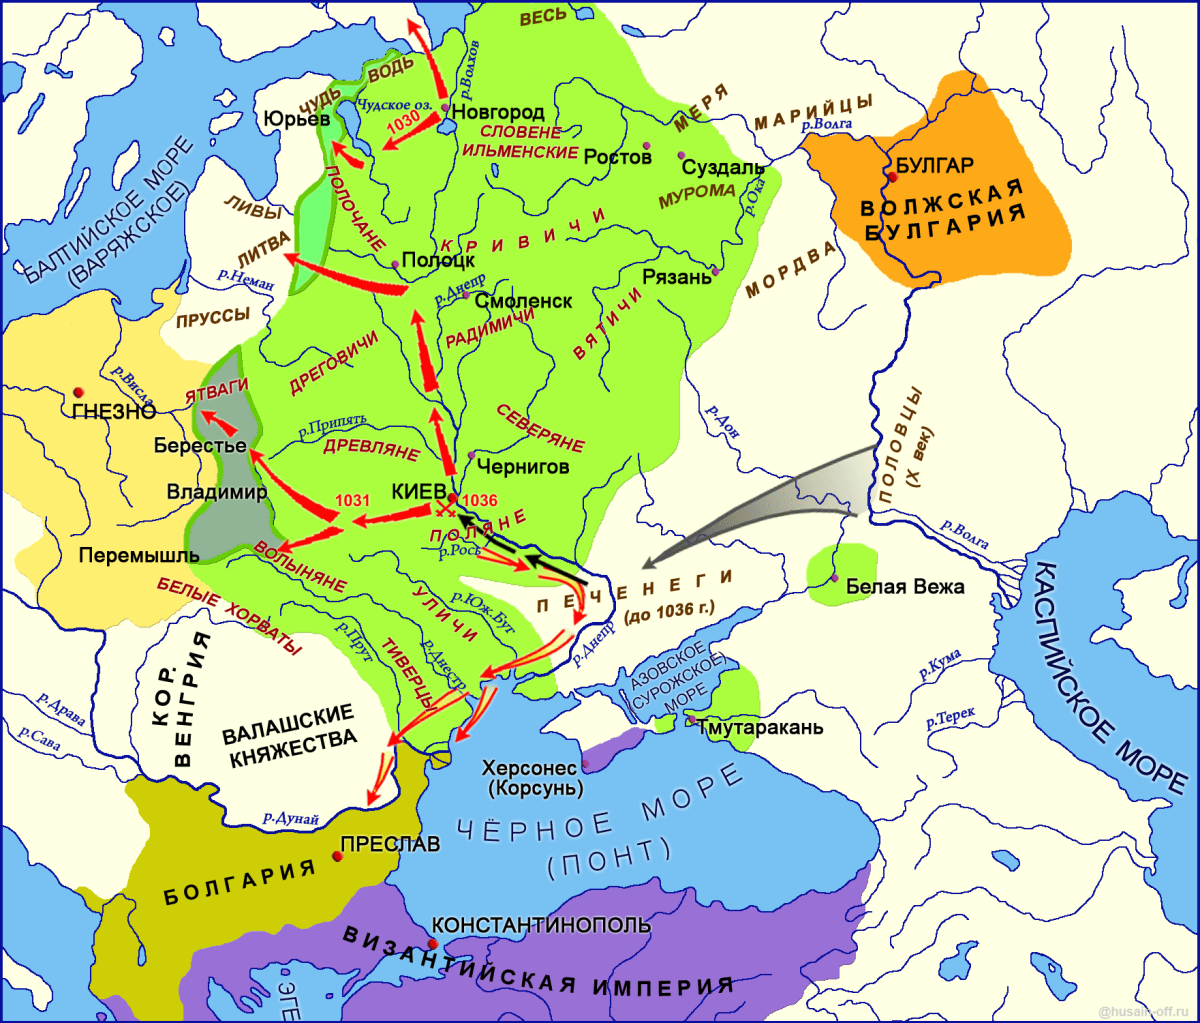 Конец 10 века русь. Карта древней Руси при Ярославе мудром.